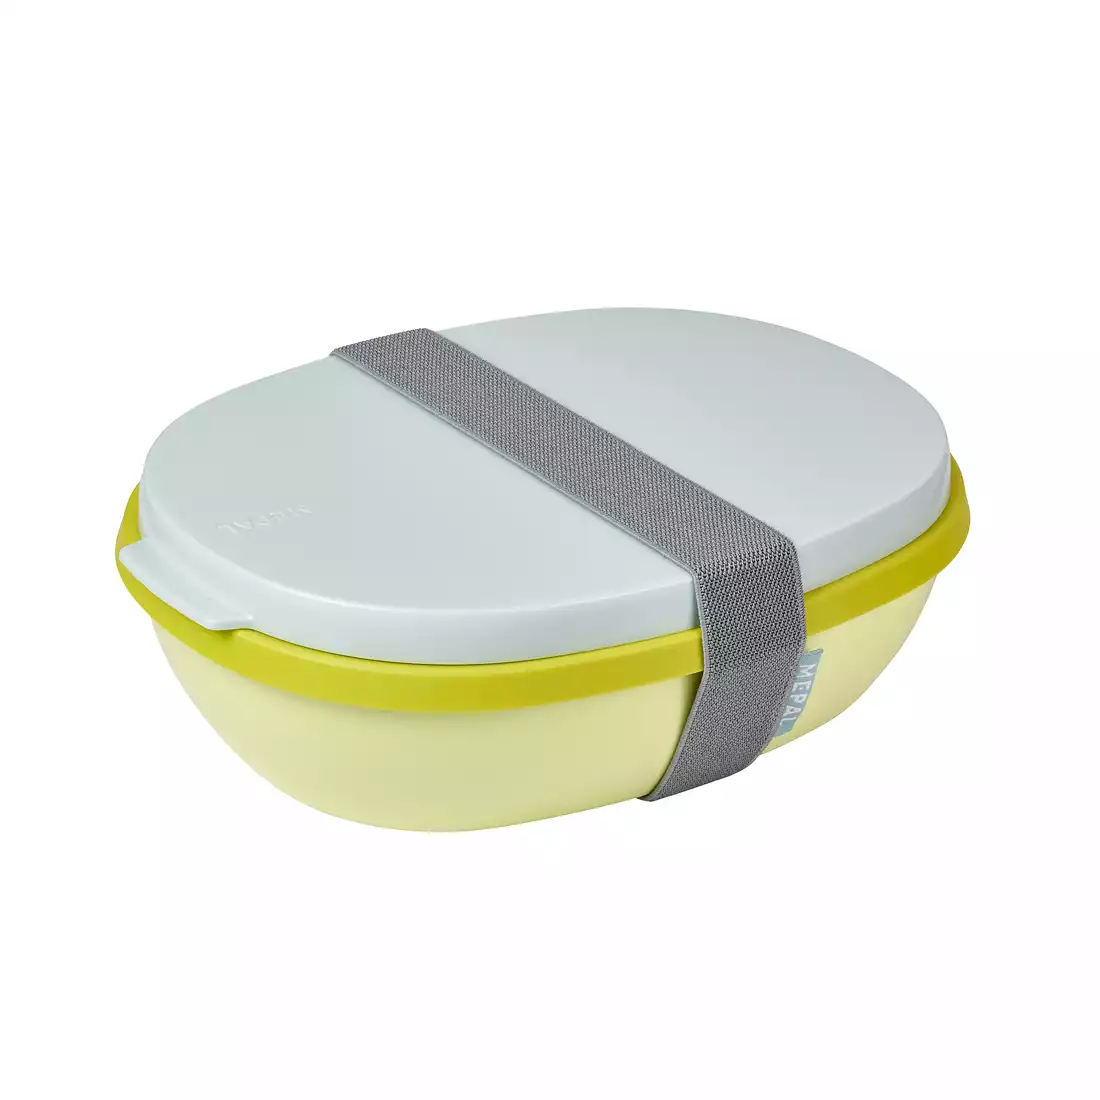 Mepal Ellipse Duo Lemon Vibe lunchbox, sárga-menta